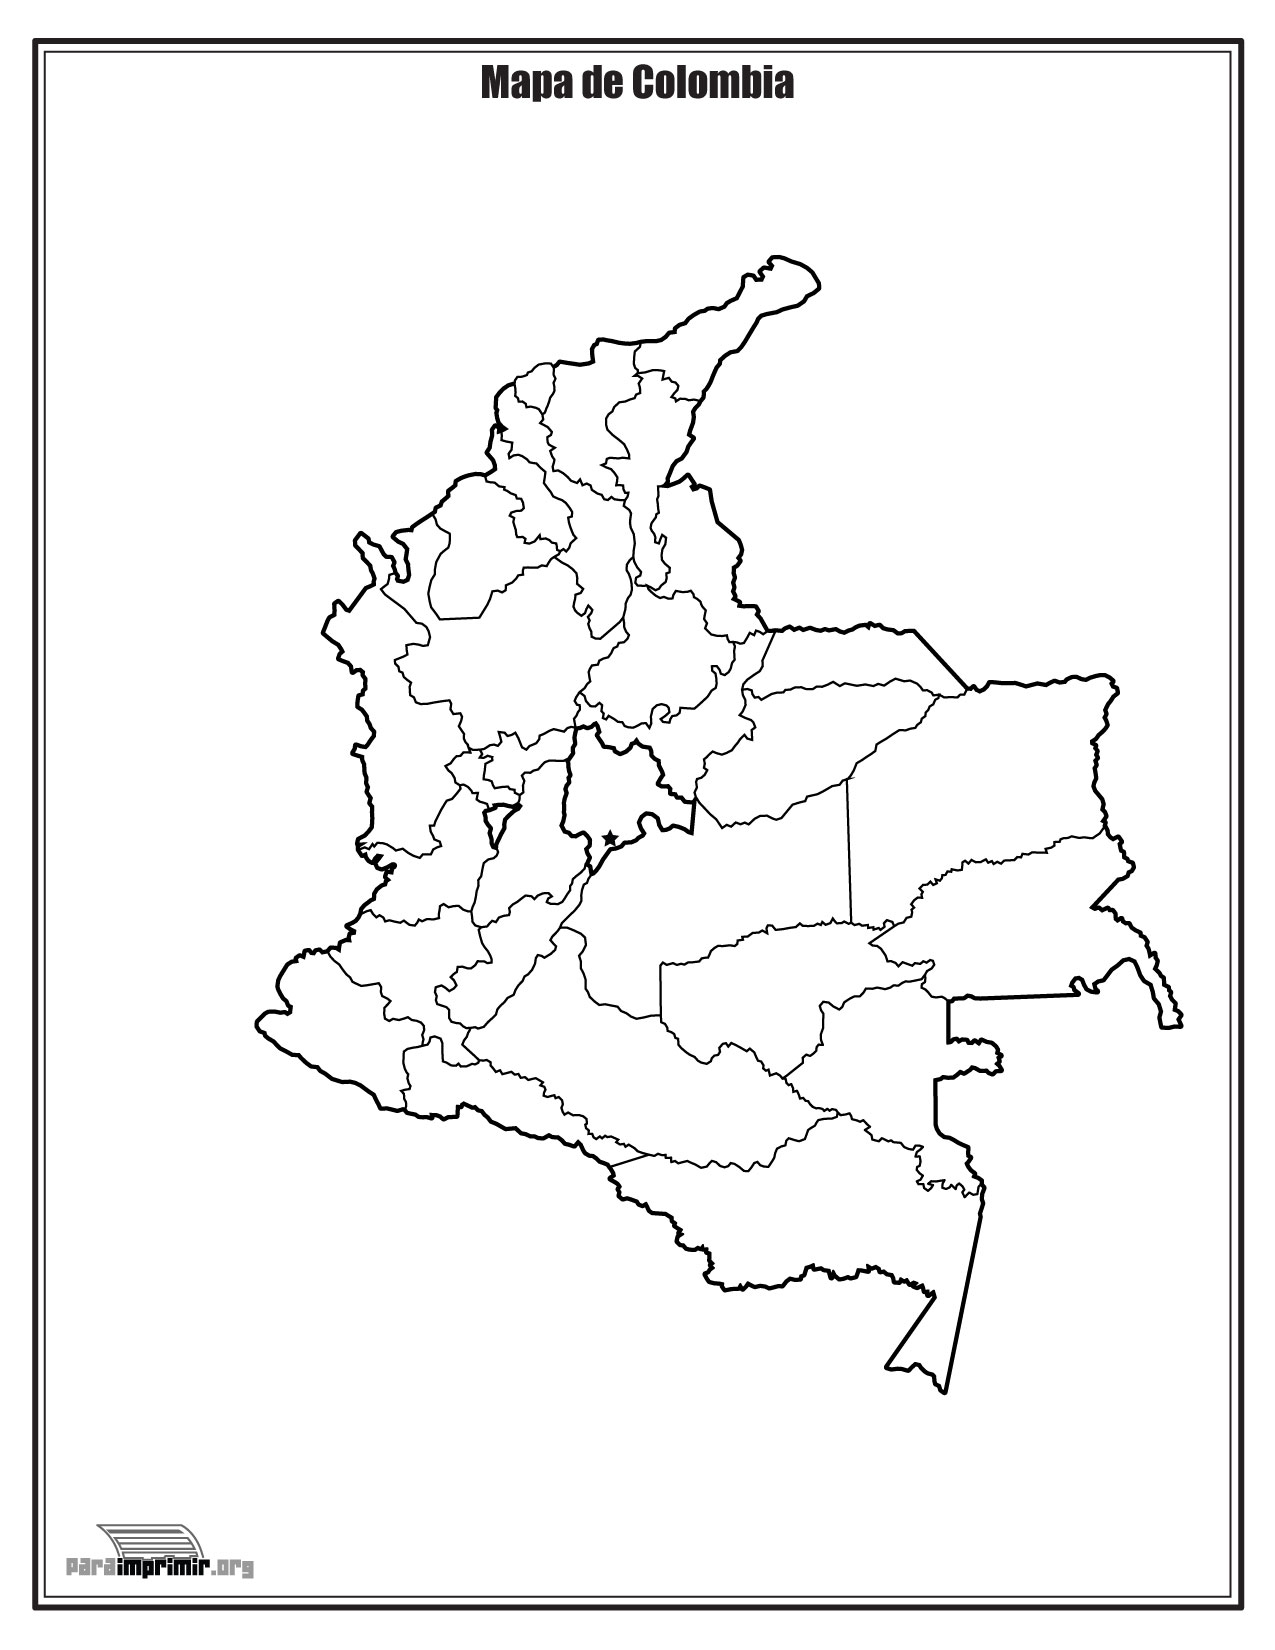 Mapa De Colombia Con Su Division Politica Para Colorear Imagui